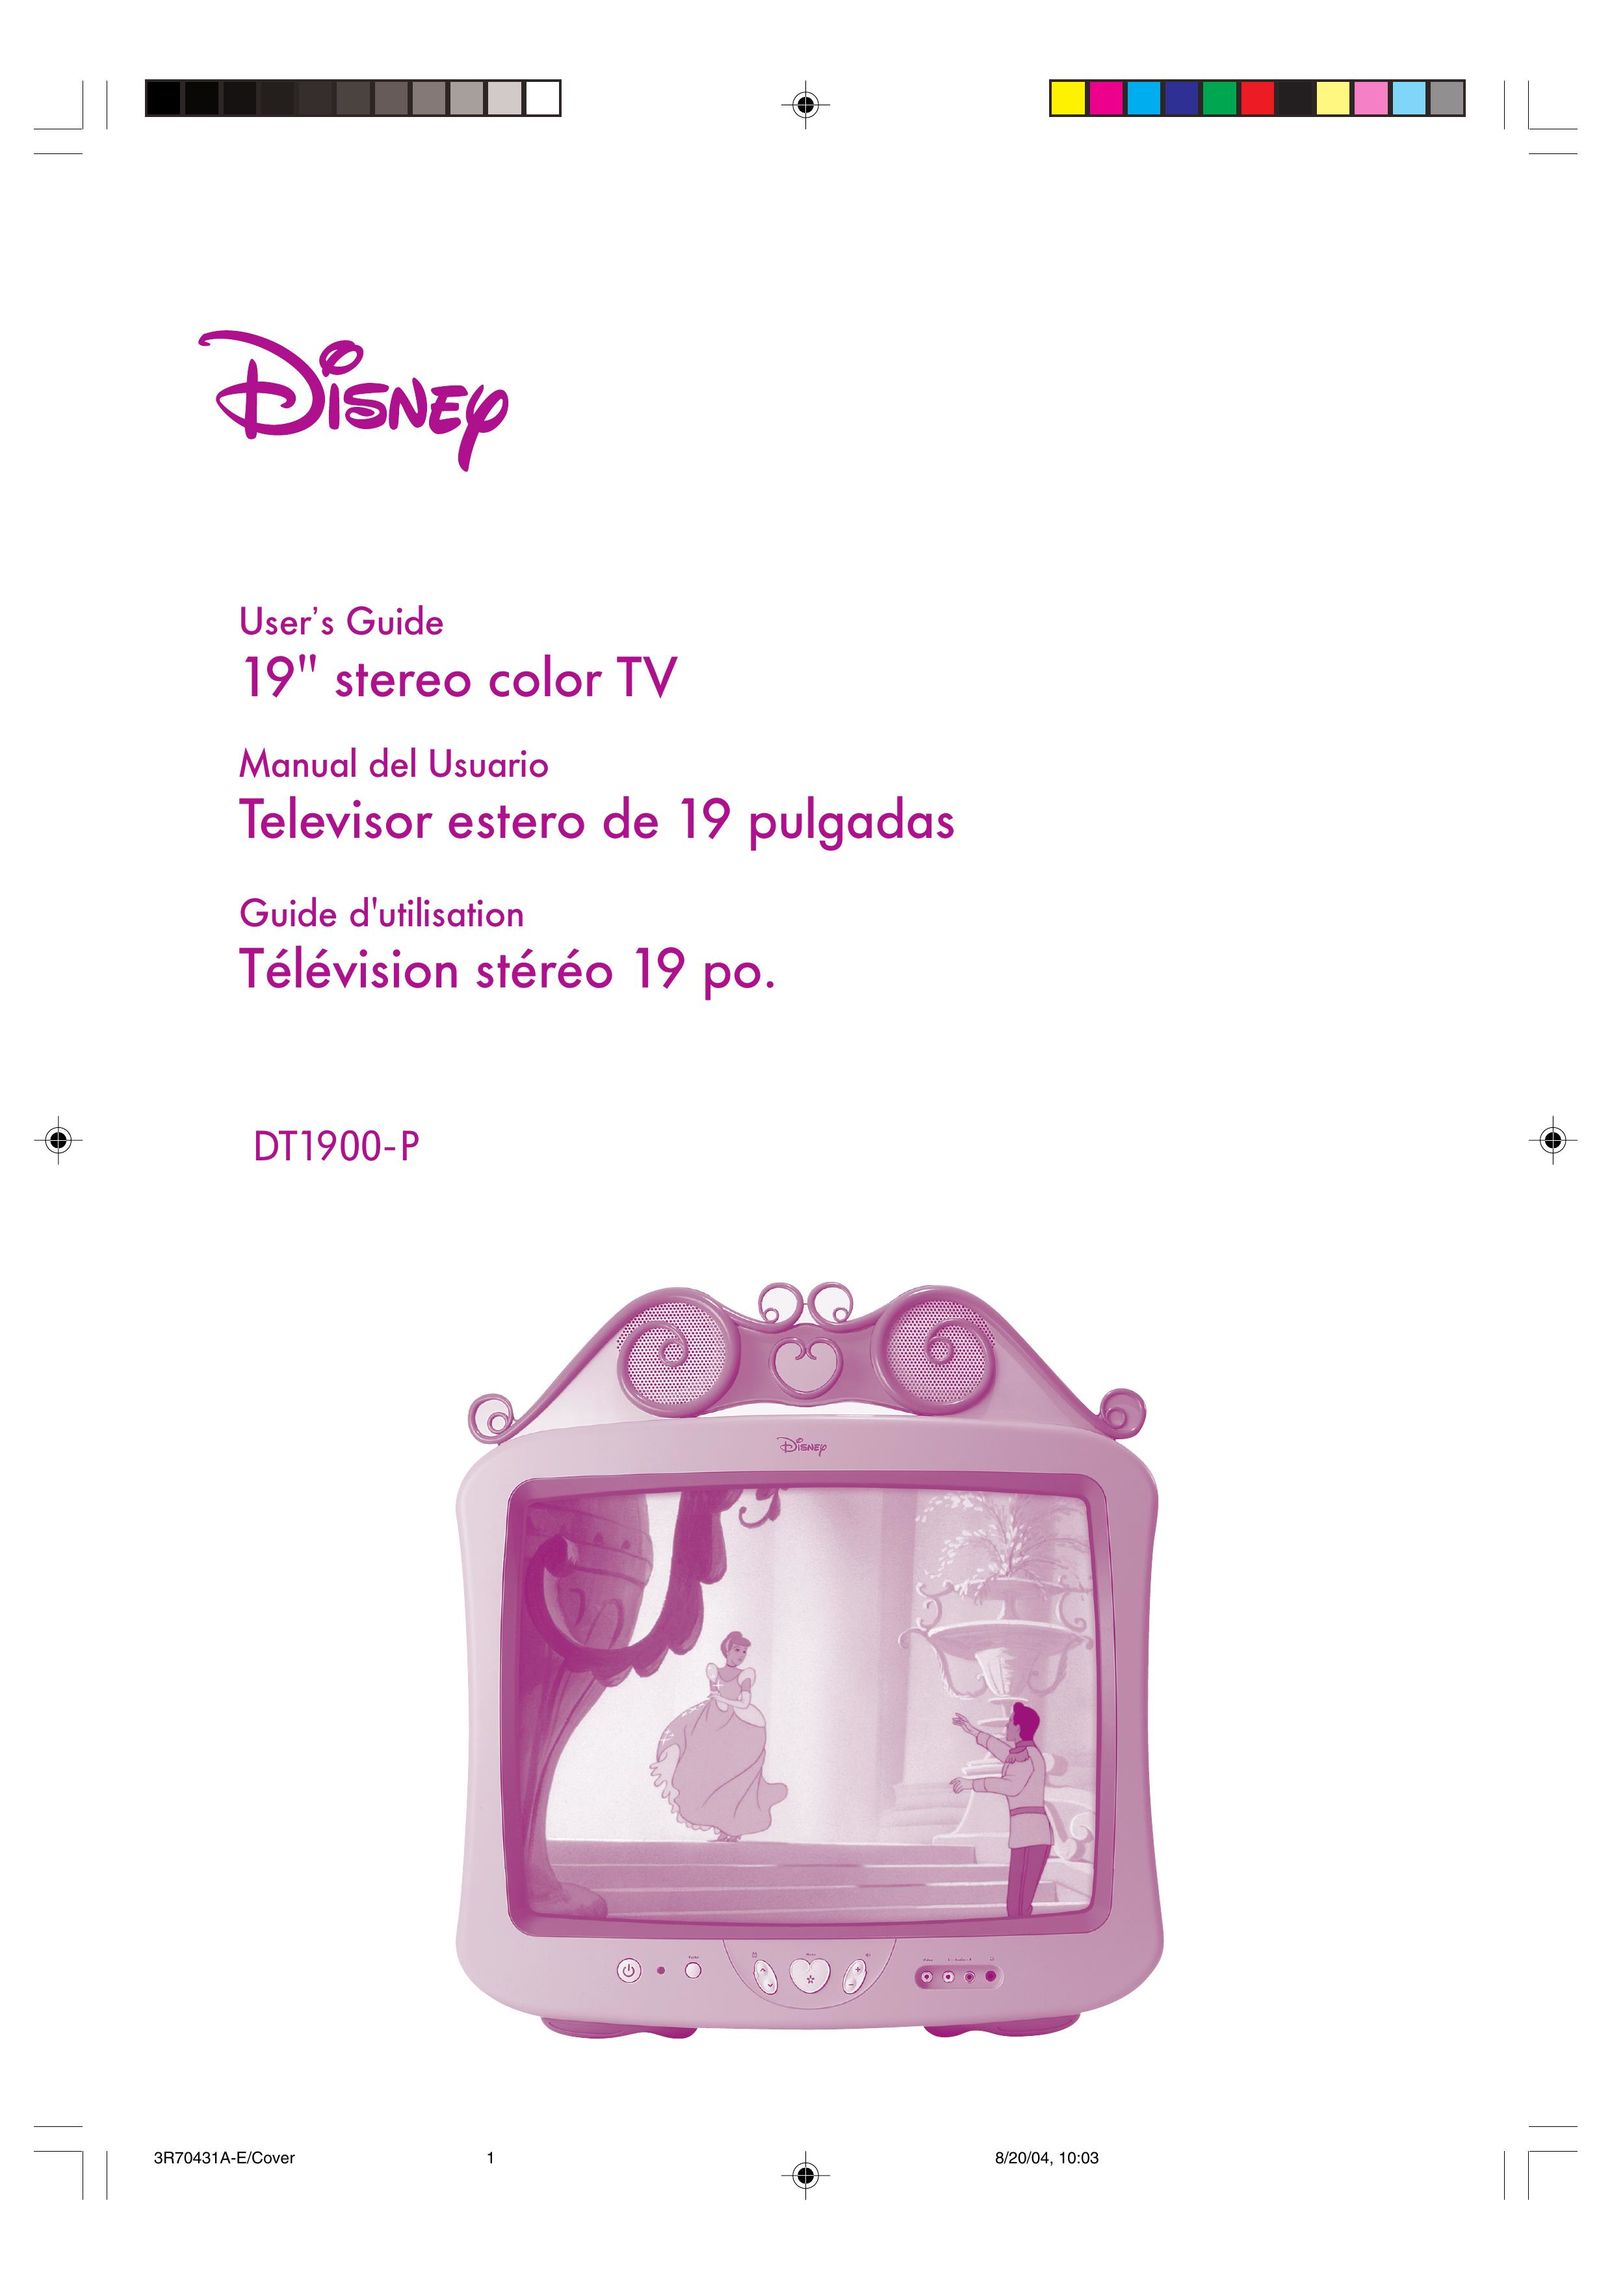 Disney DT1900-P CRT Television User Manual